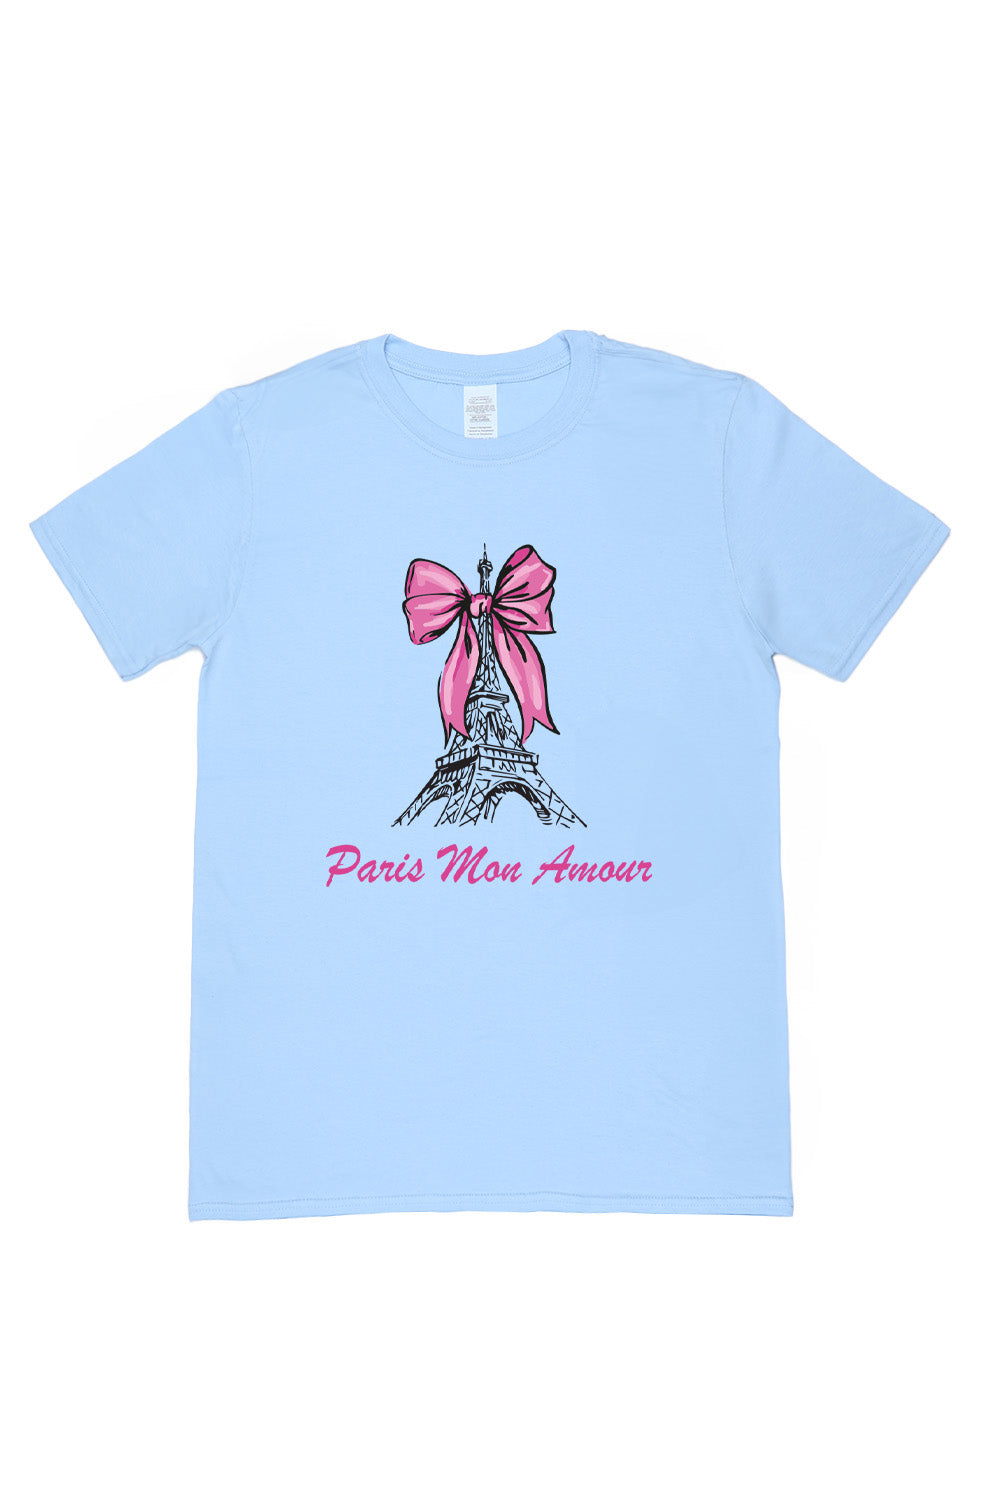 Paris Mon Amour T-Shirt in Light Blue (Custom Packs)